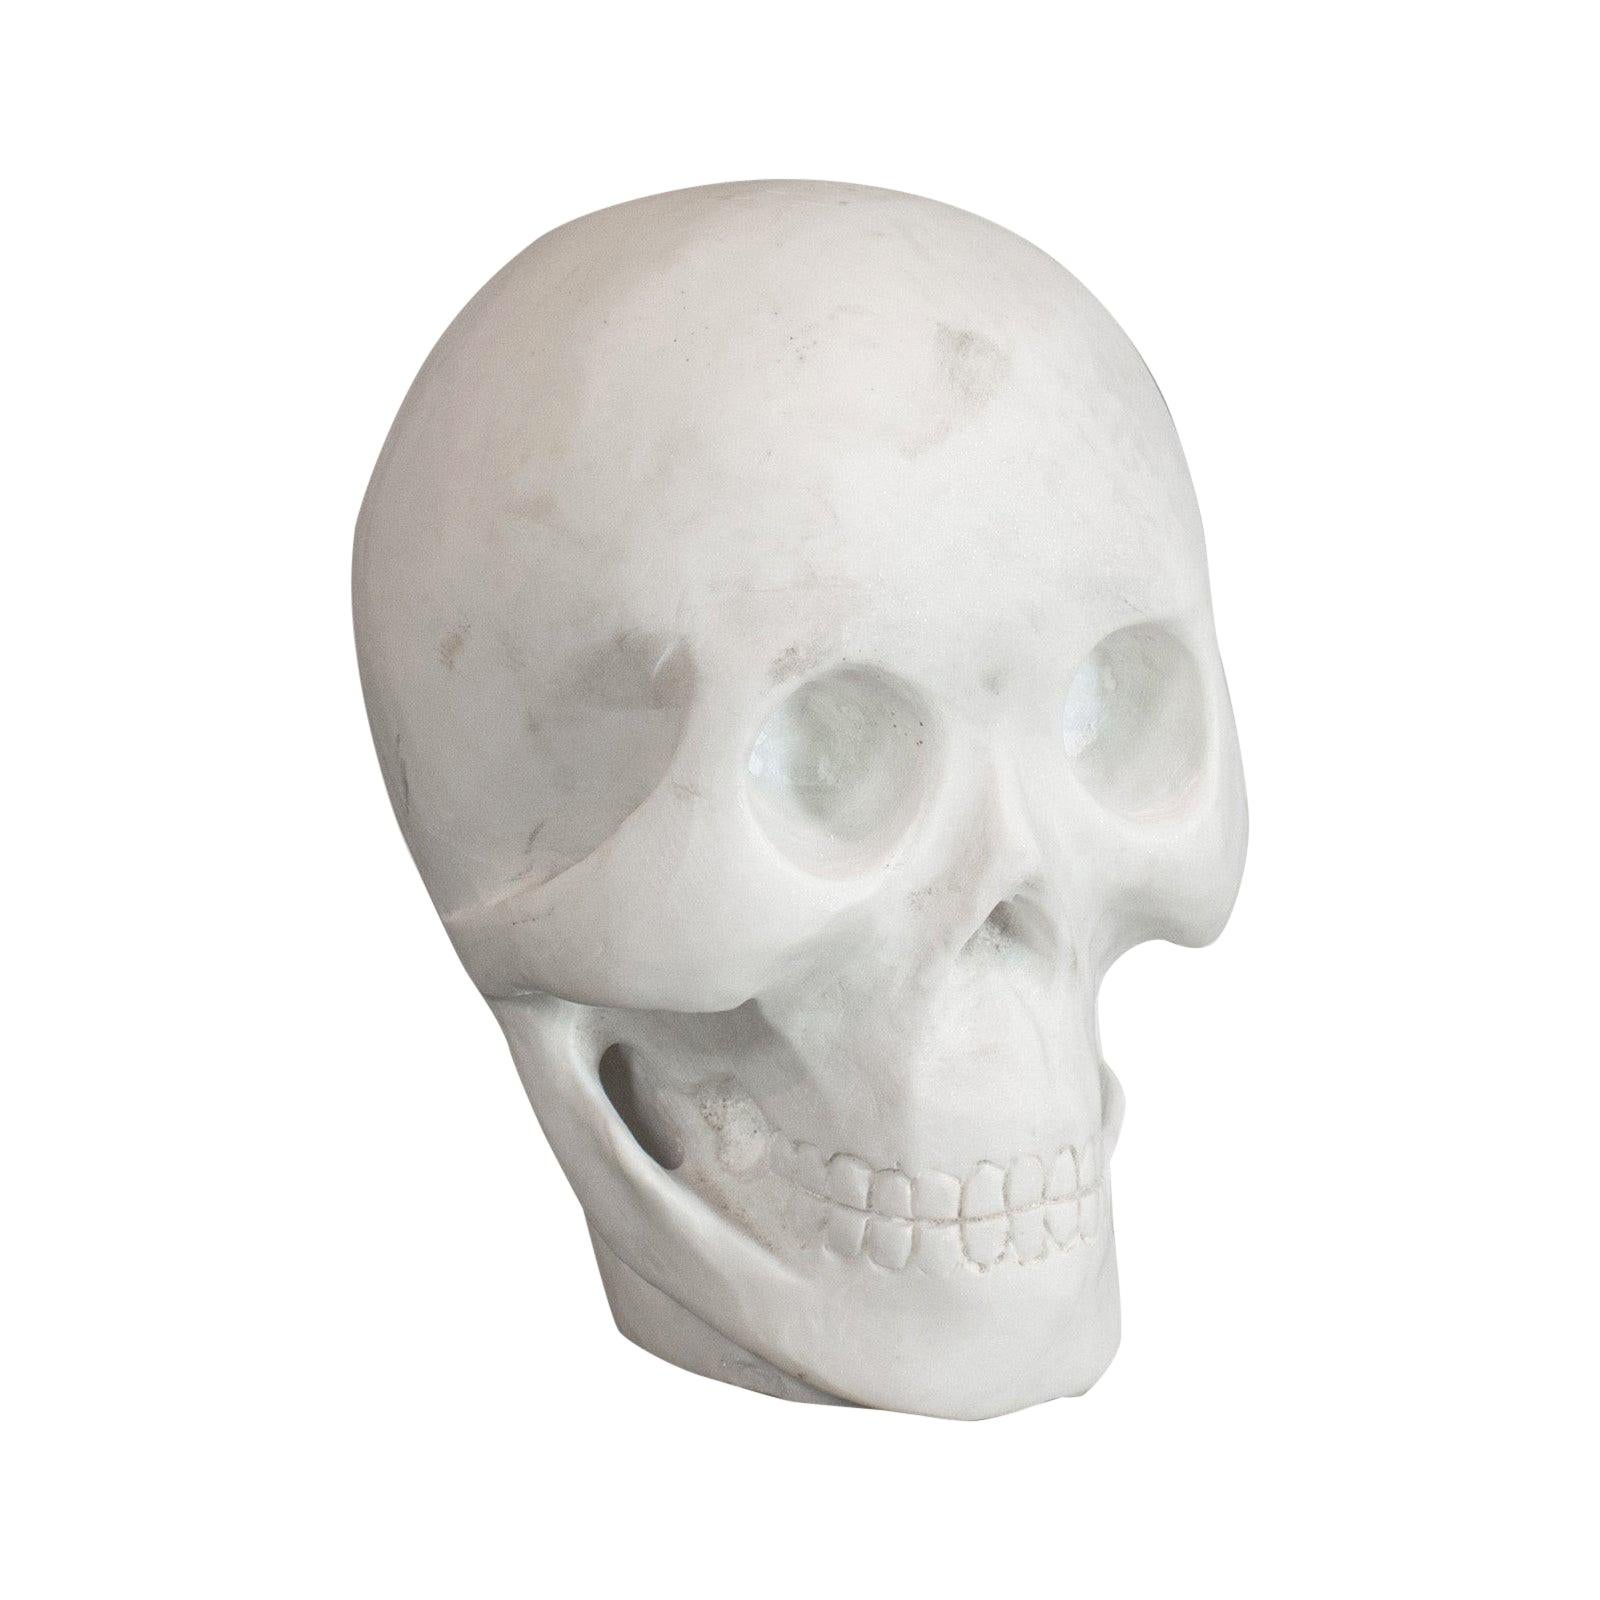 Decorative Skull - 82 For Sale on 1stDibs